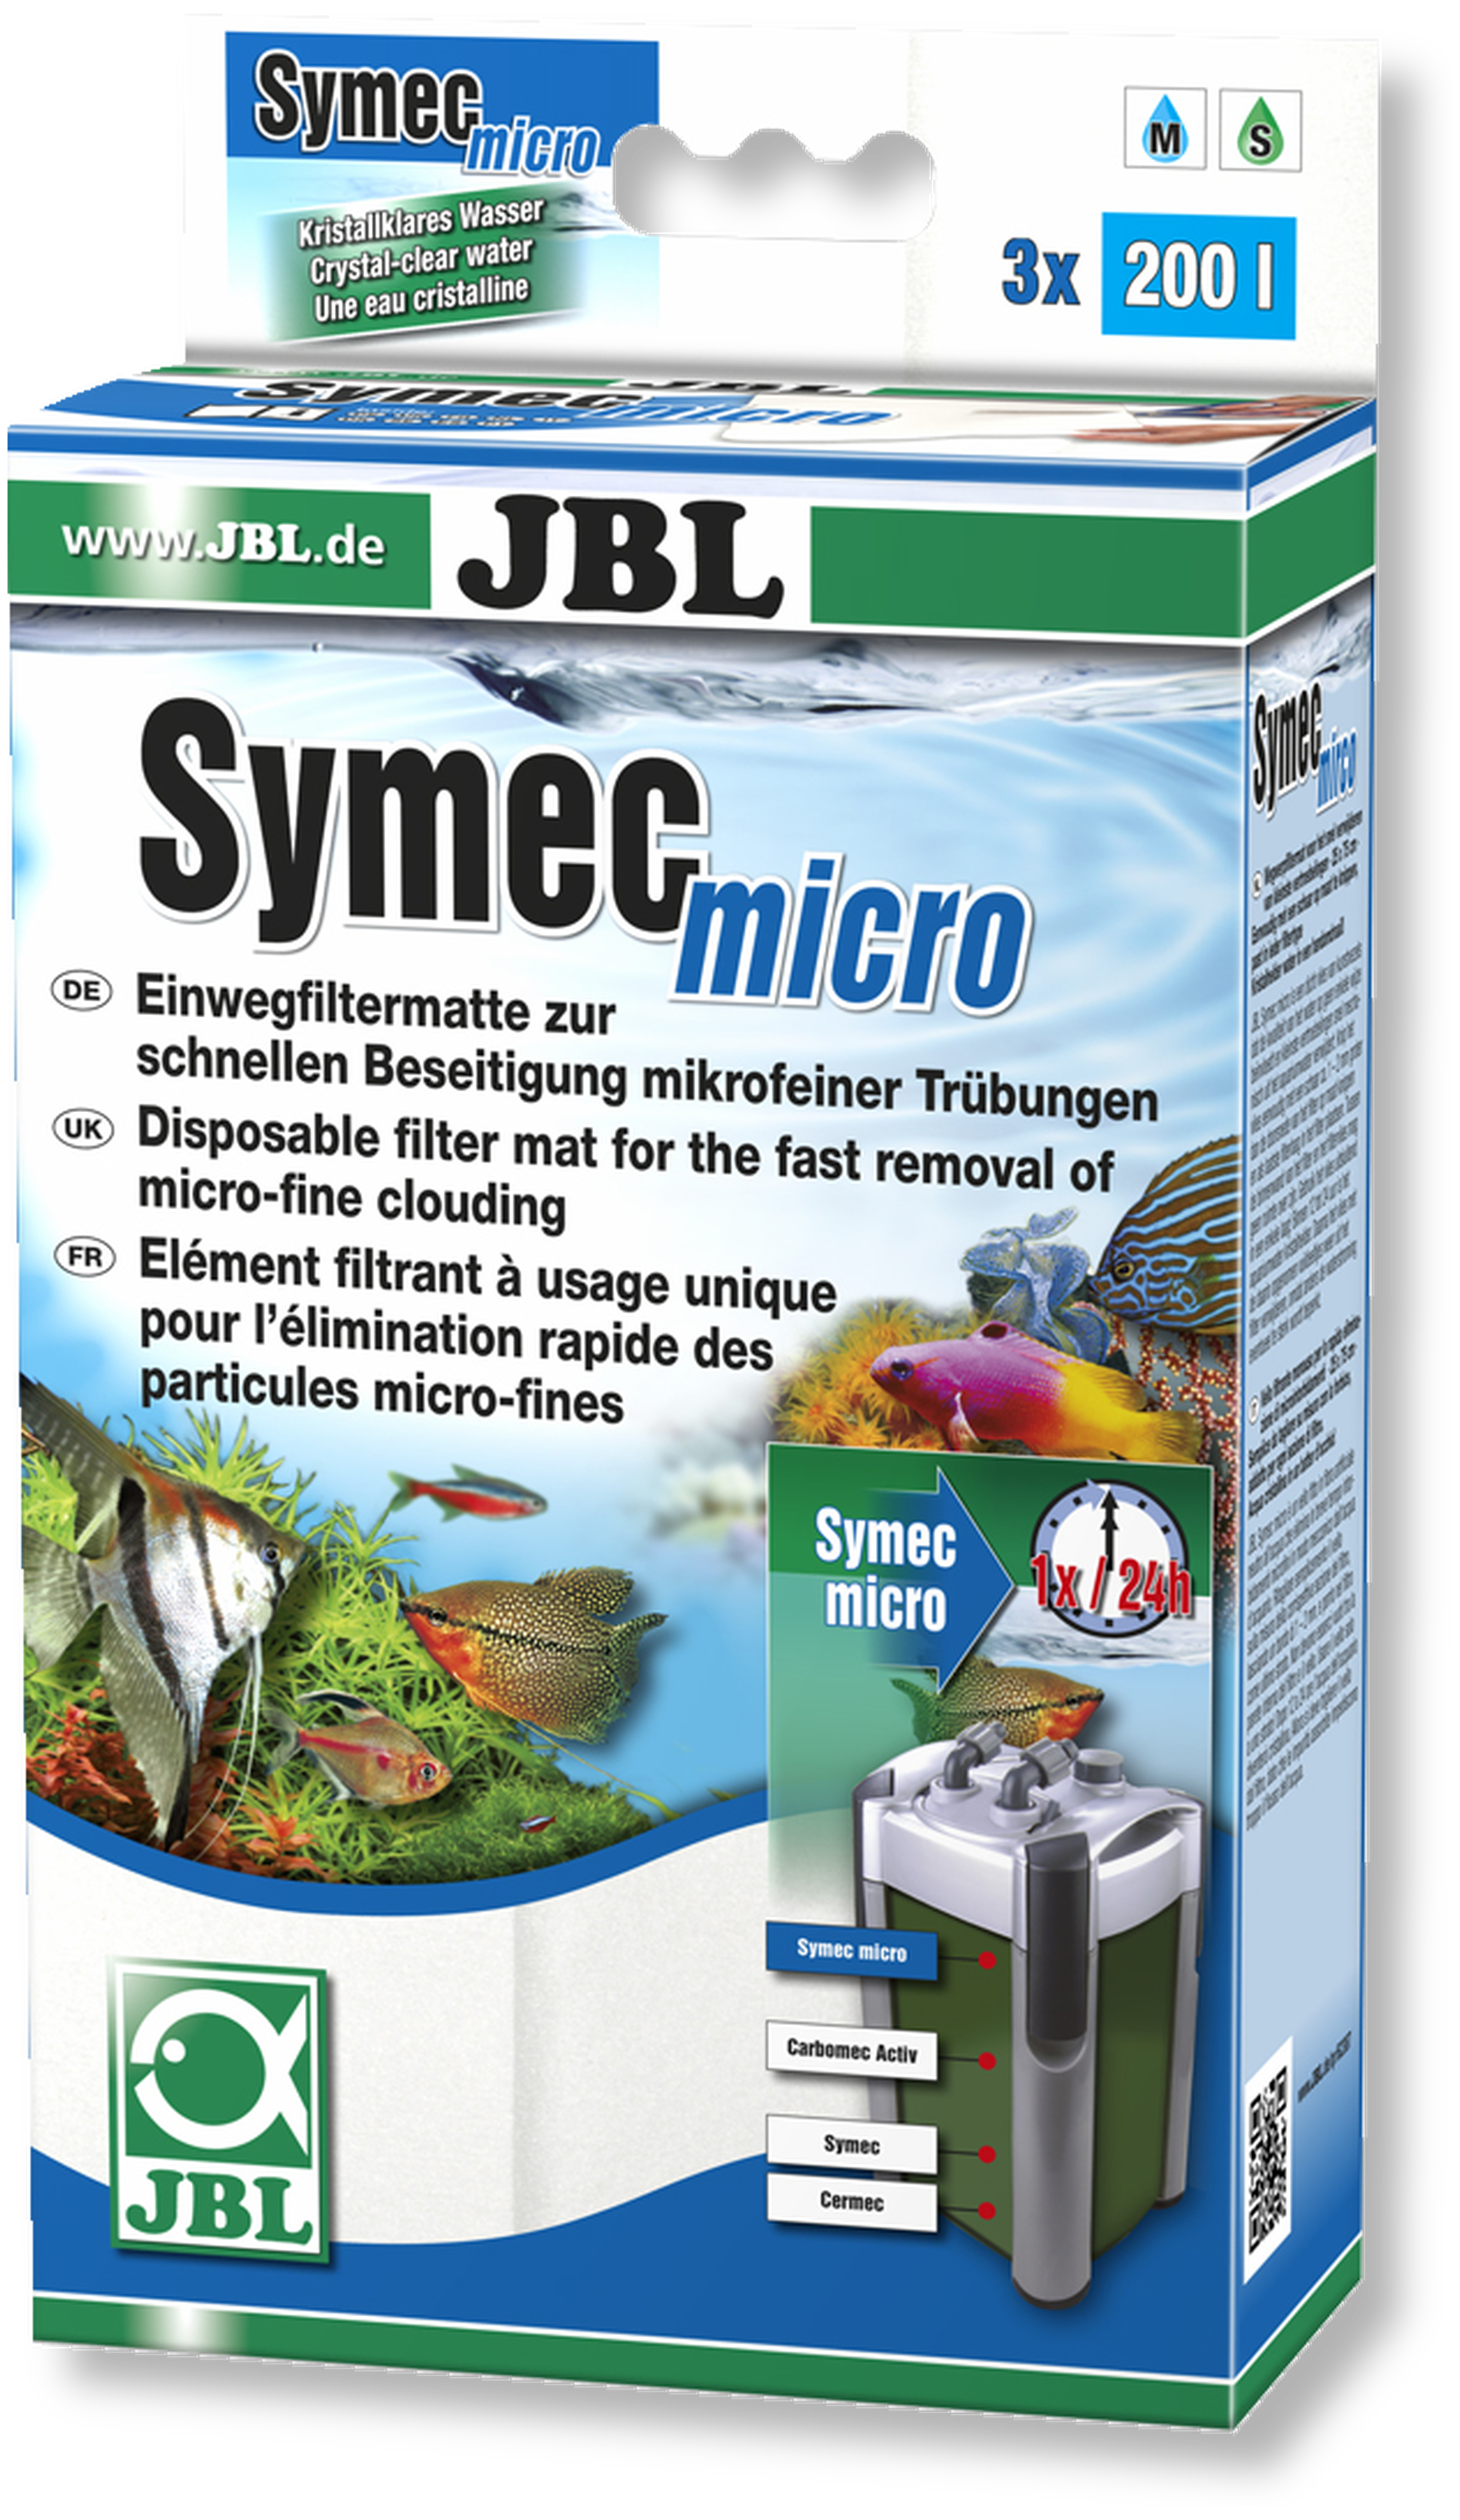 JBL SymecMicro, 25 x 75 cm, Filterwatteextrafeine Filterung